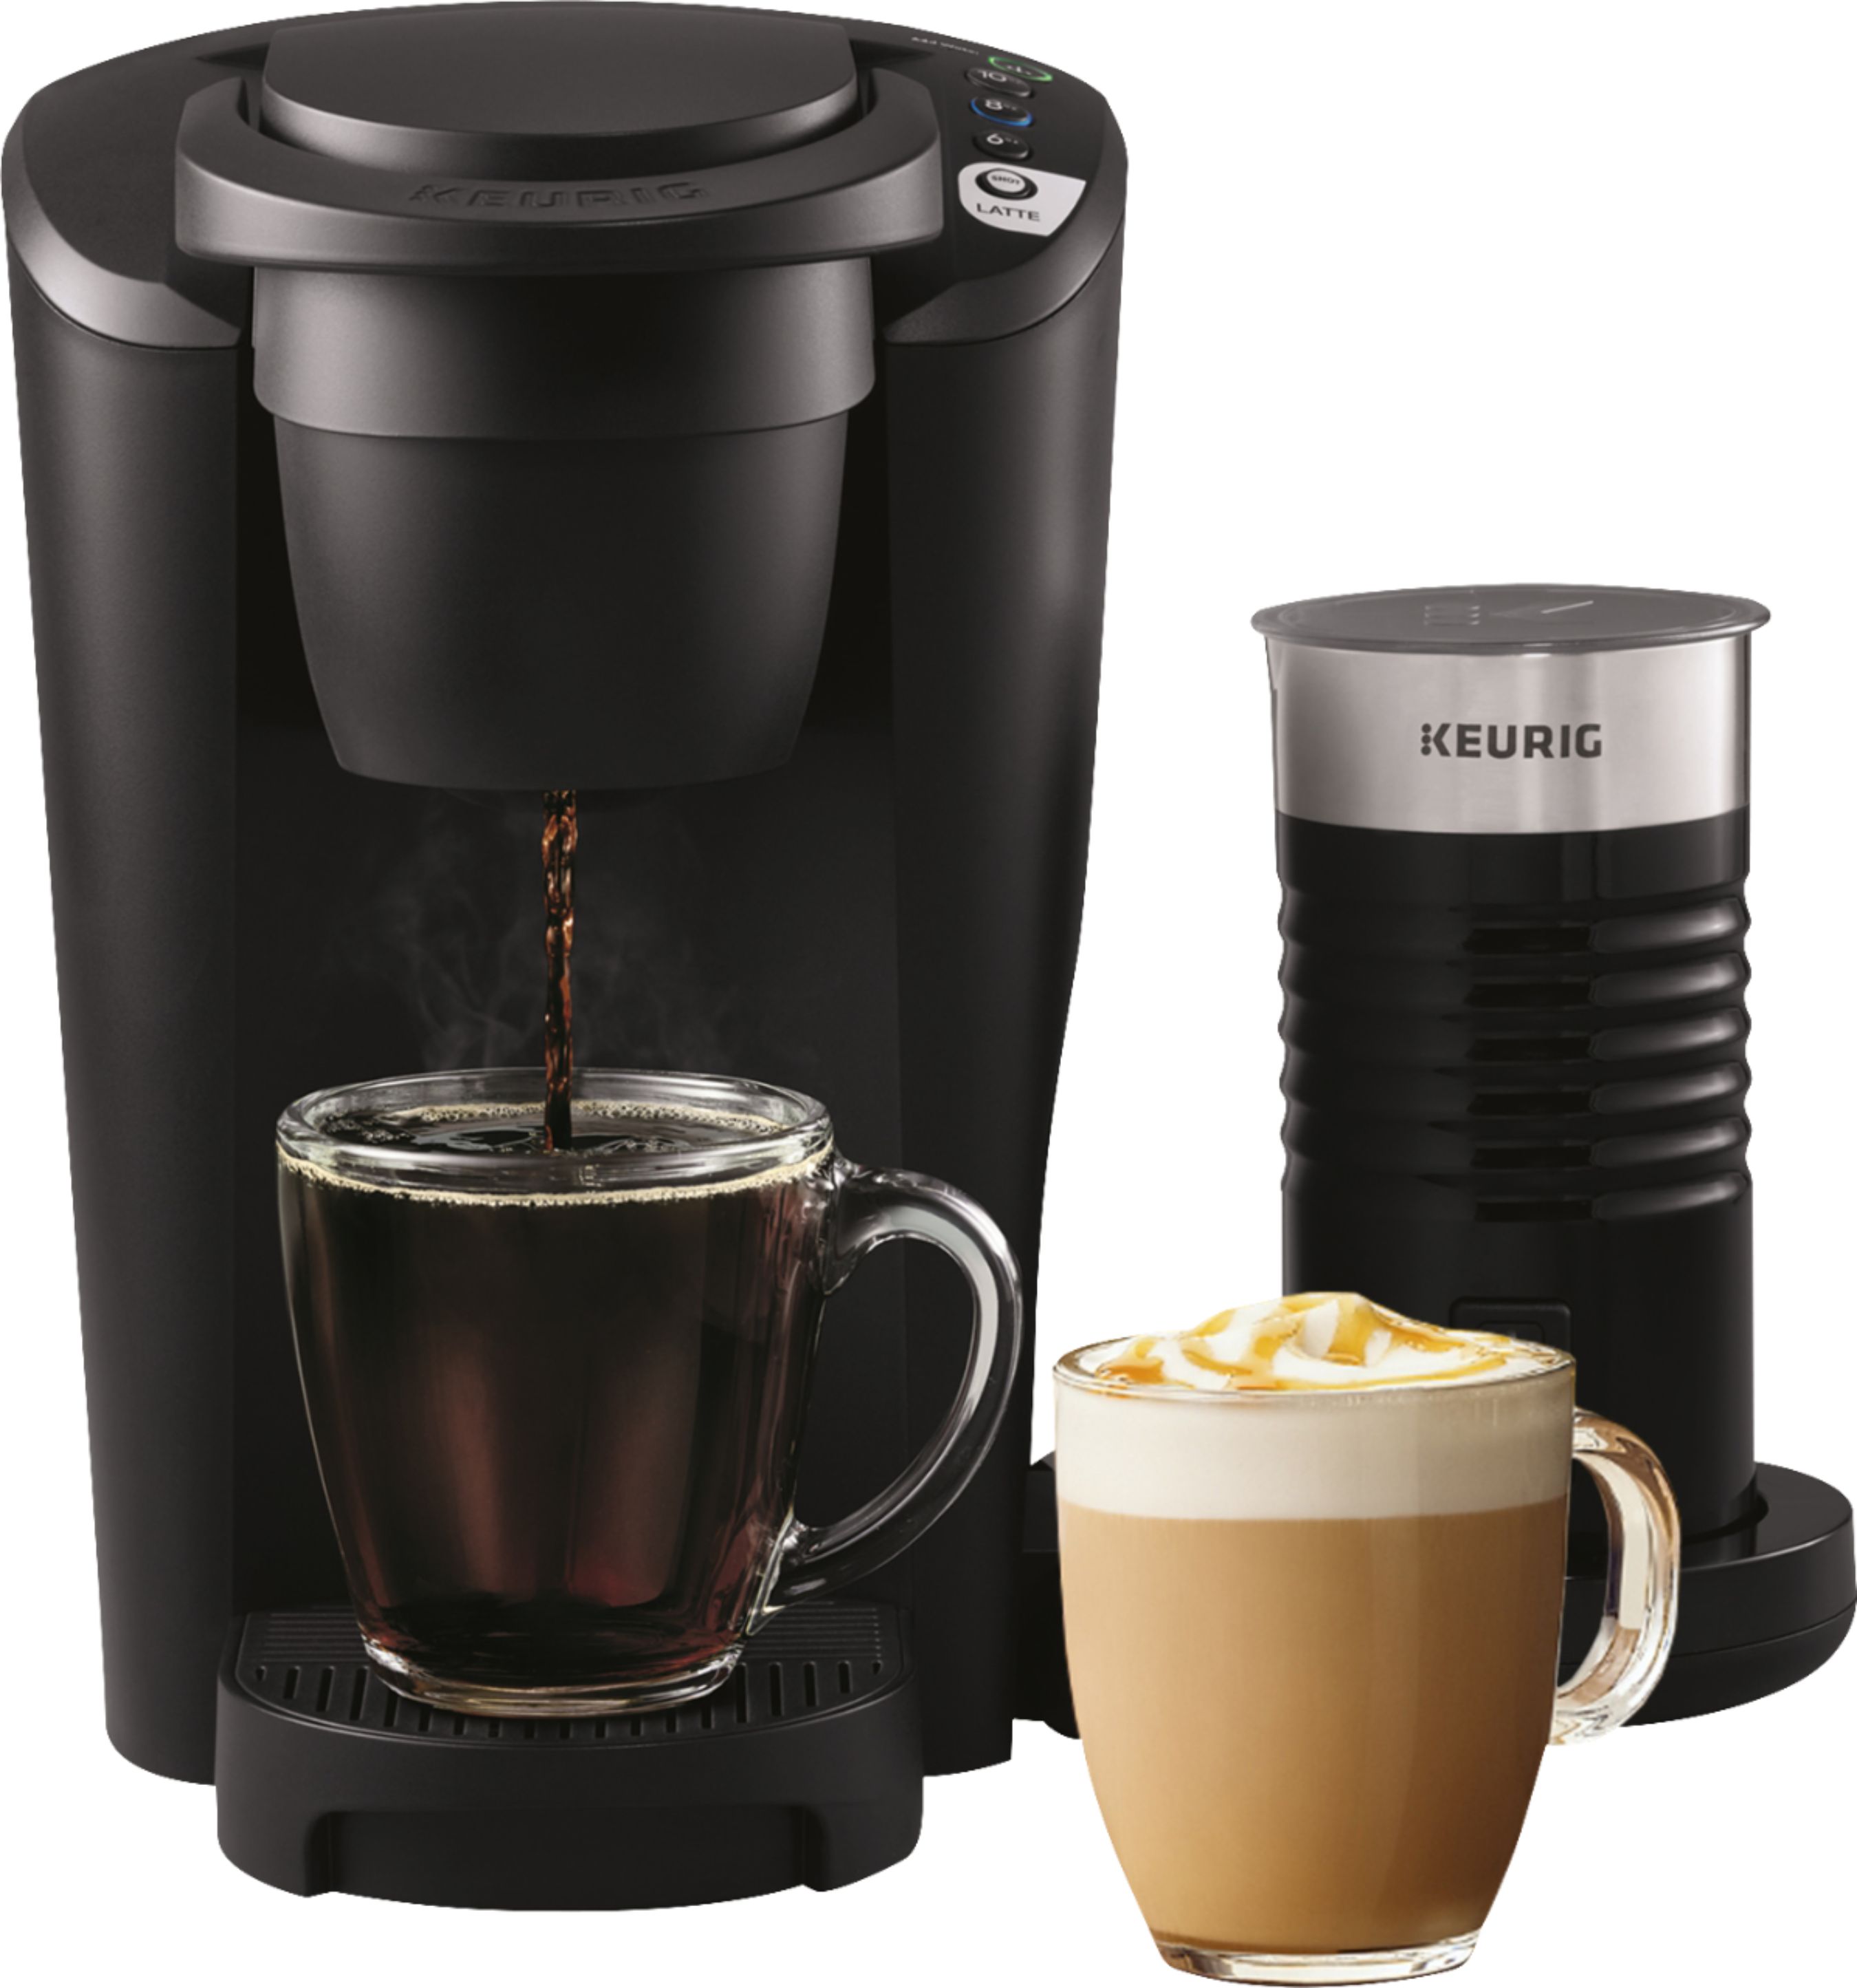 BestBuy has Keurig K-Latte Single Serve K-Cup Coffee & Latte Maker (Black) $59.99 + Free Shipping